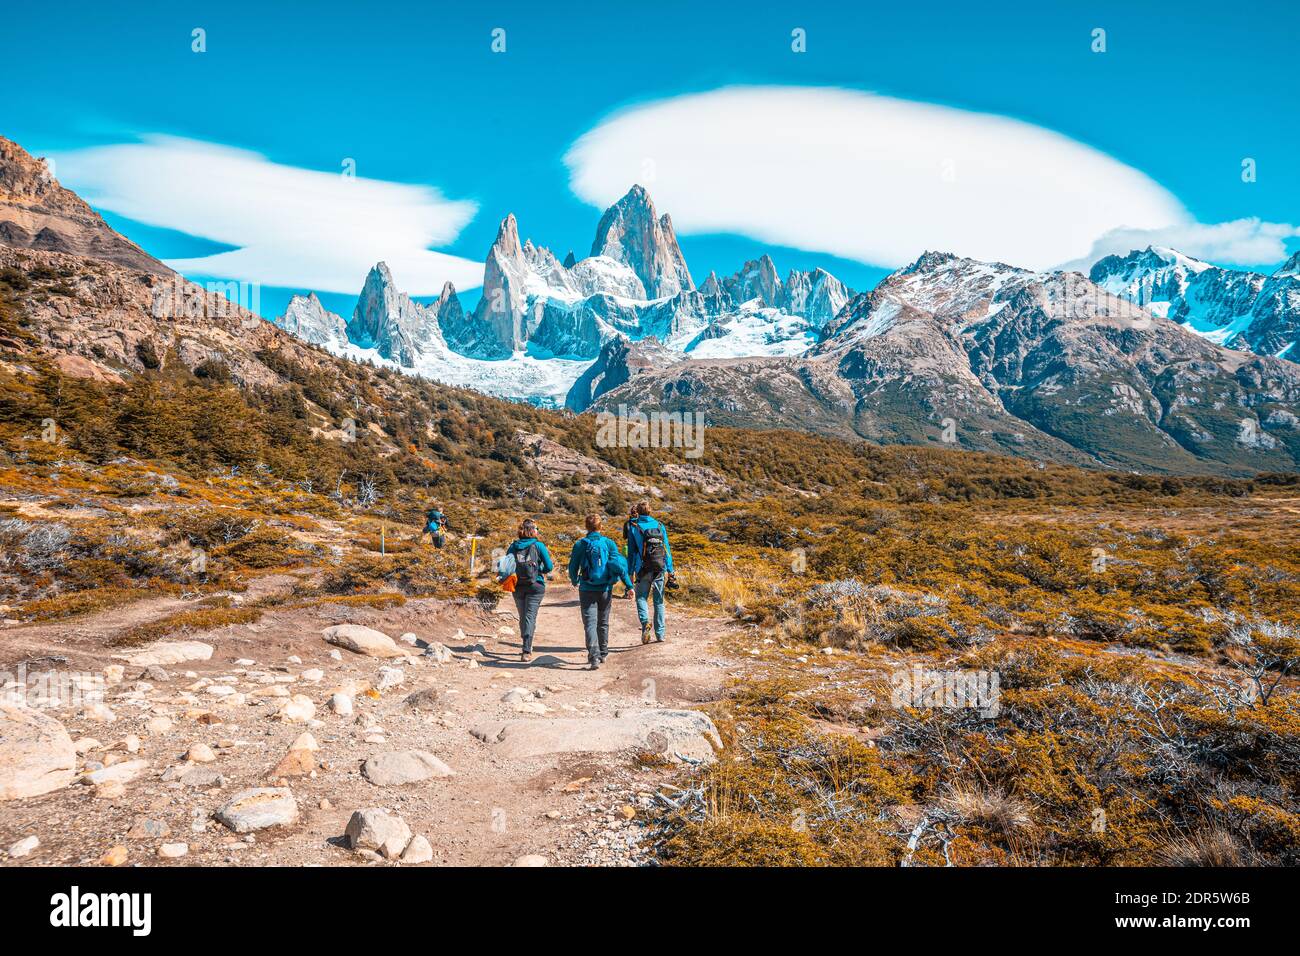 Laguna de los tress hike in Patagonia Argentina Stock Photo